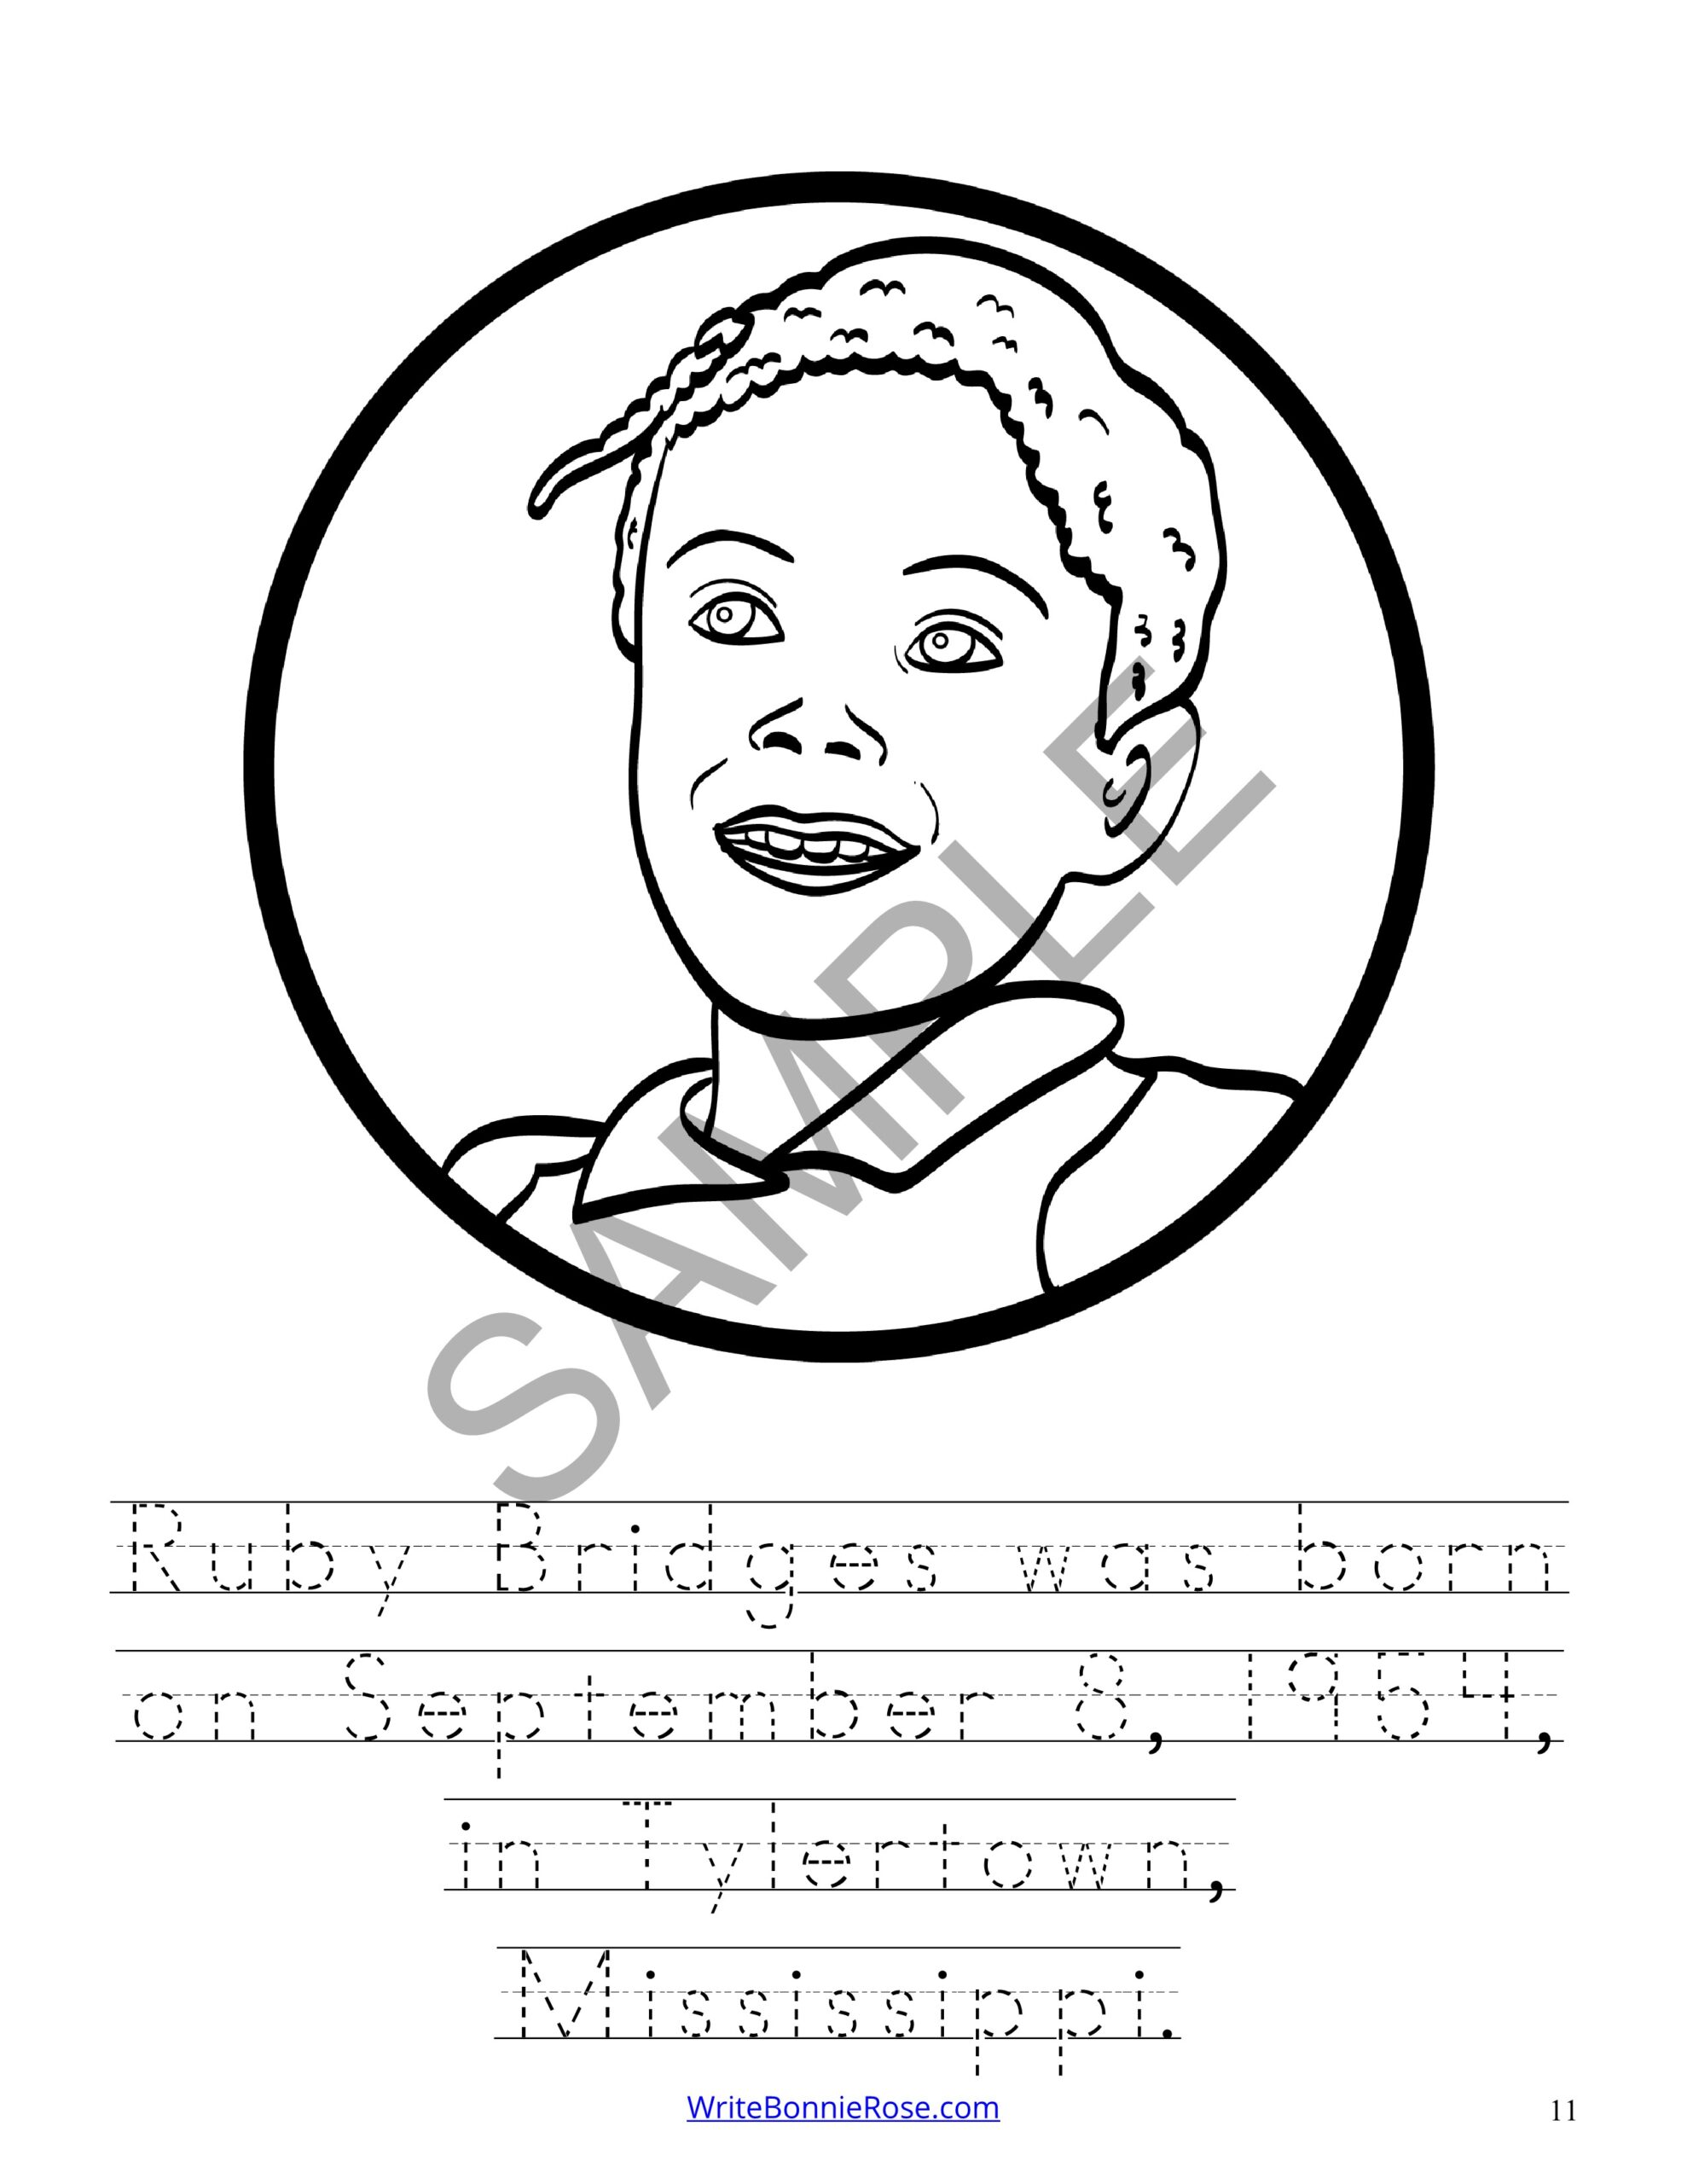 Ruby bridges coloring book